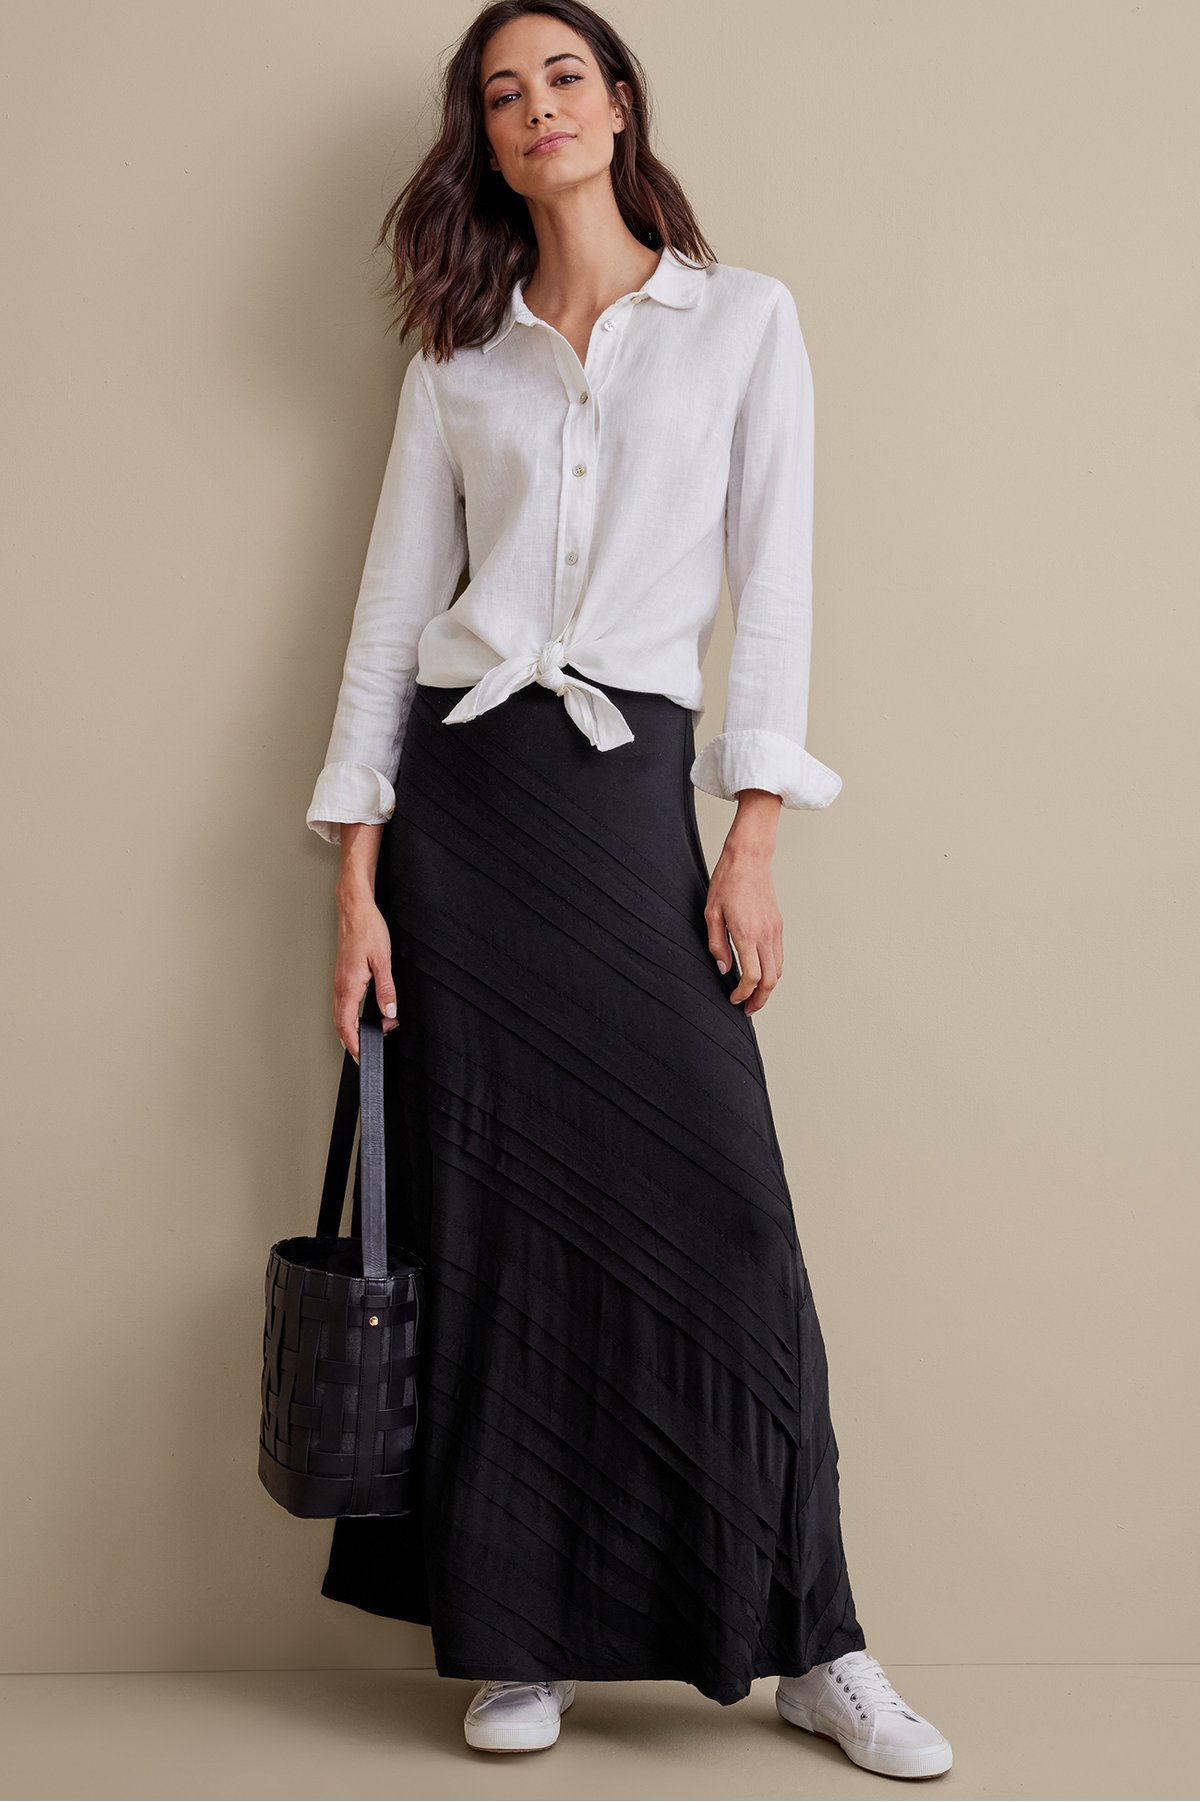 Women's Rosemary Skirt by Soft Surroundings, in Black size L (14-16)